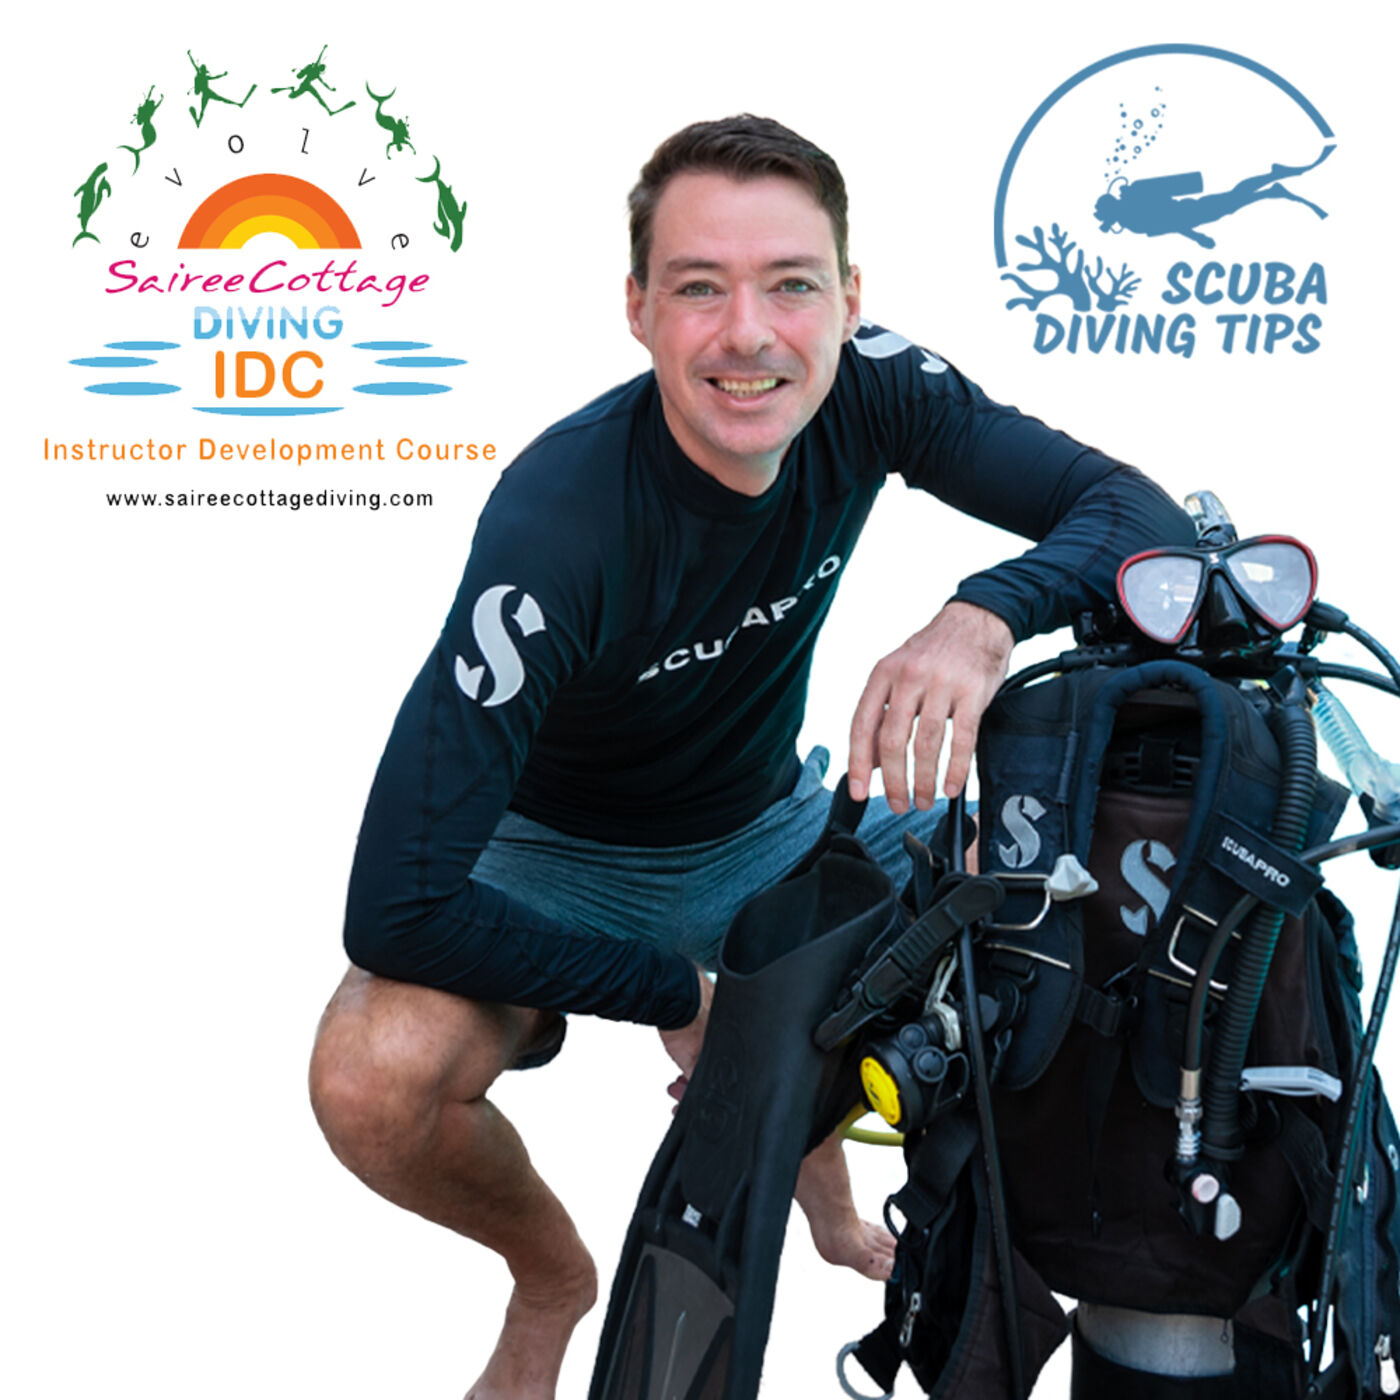 Marcel Van Den Berg - Scuba diving tips - S02 E10